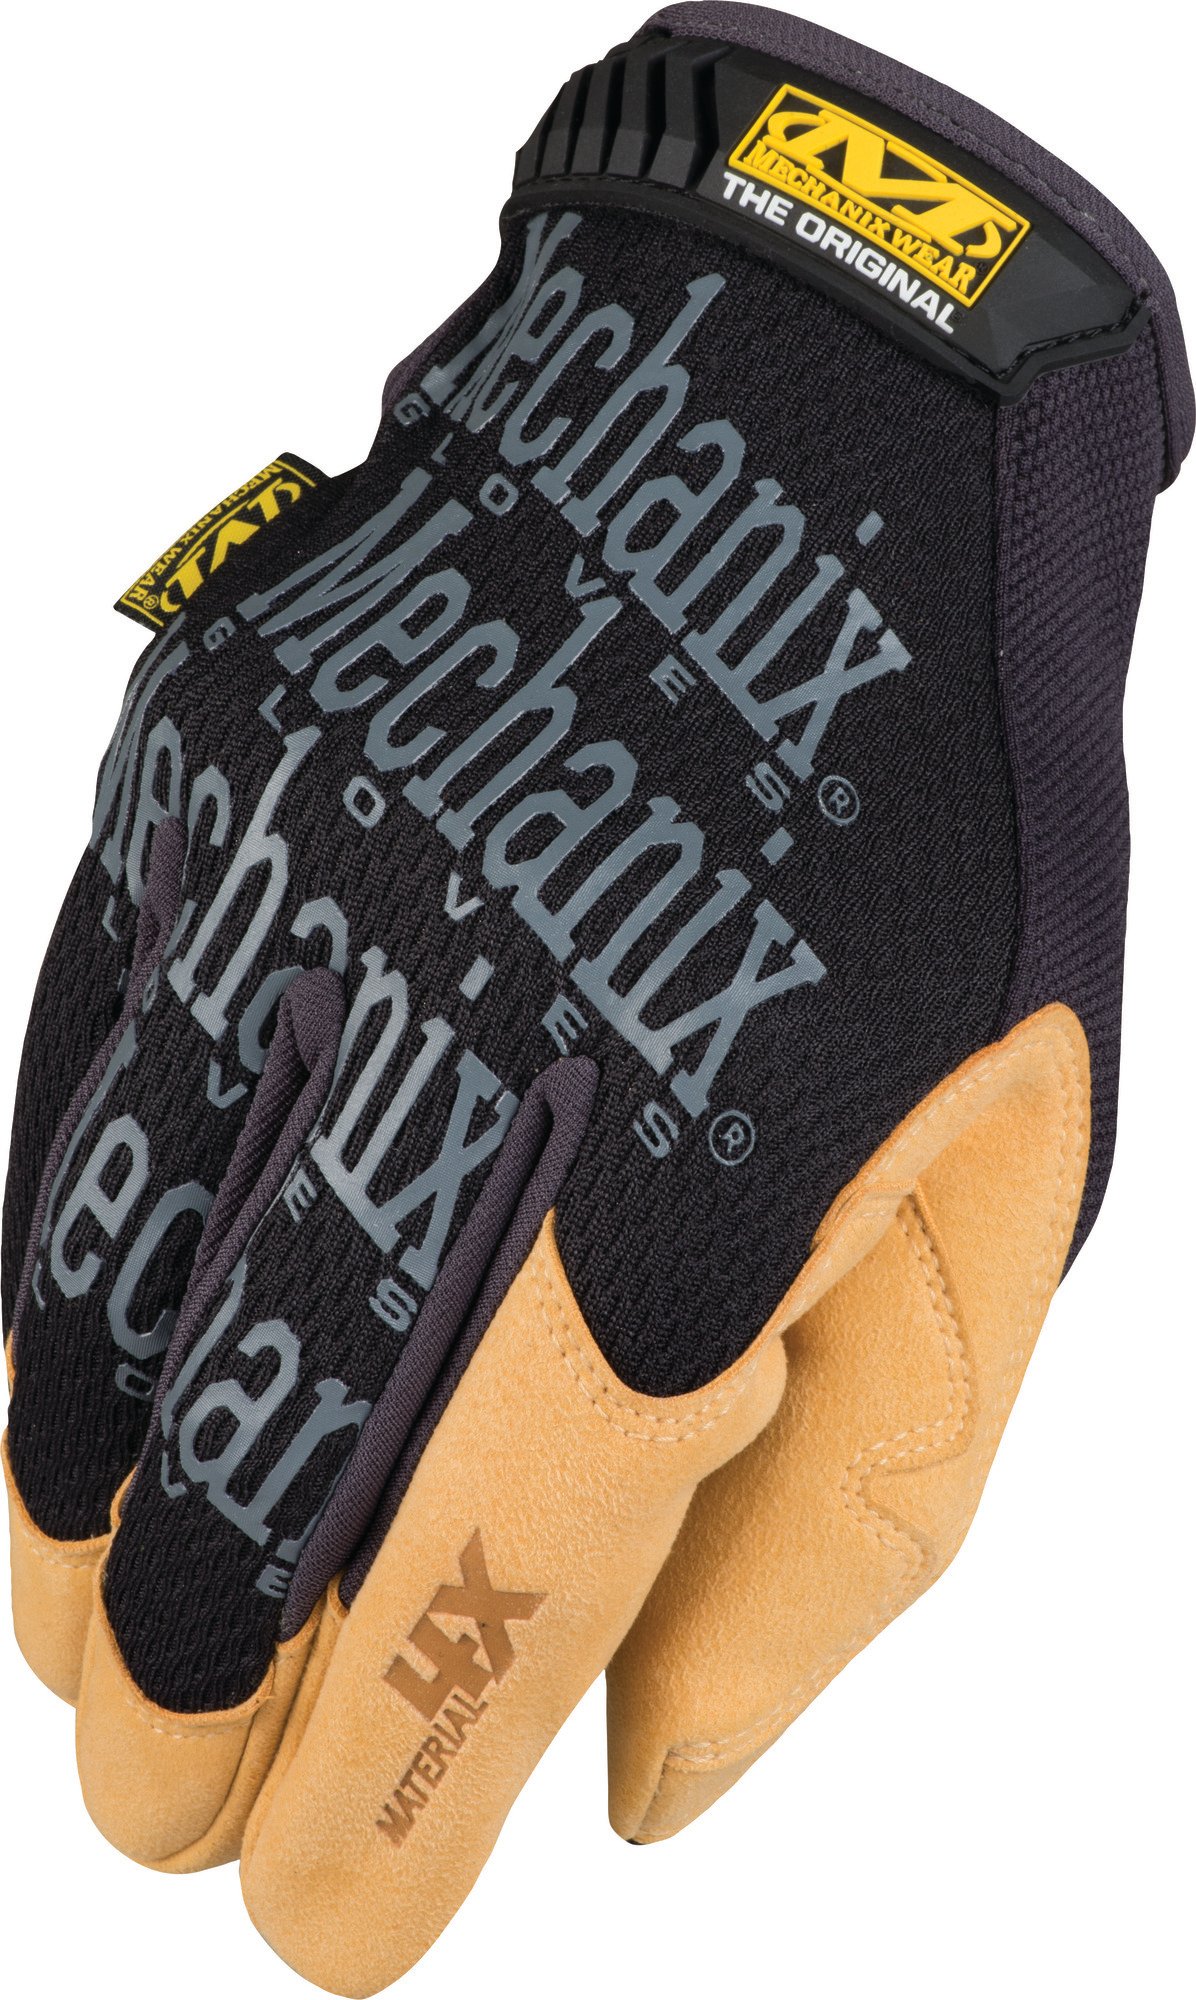 MECHANIX Kombinované kožené rukavice FastFit Original Material4X M/9